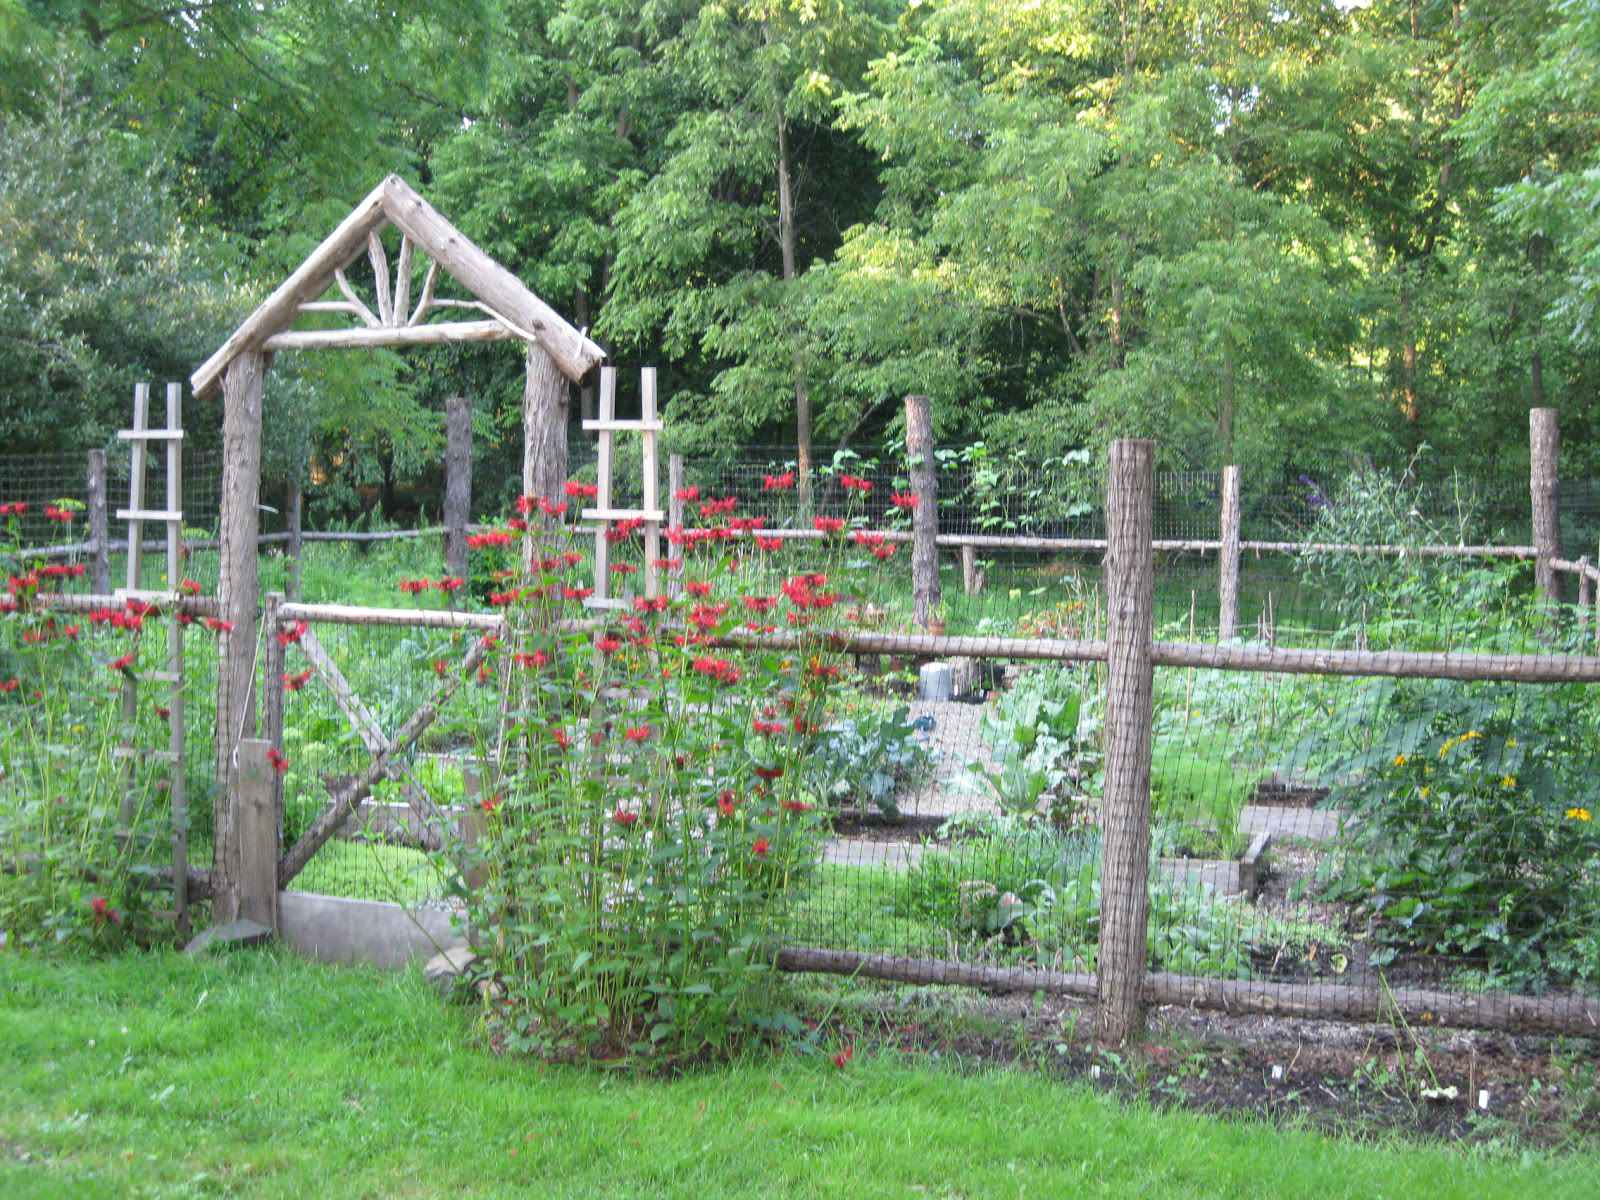 Raised Vegetable Garden, Herbs and Flowers